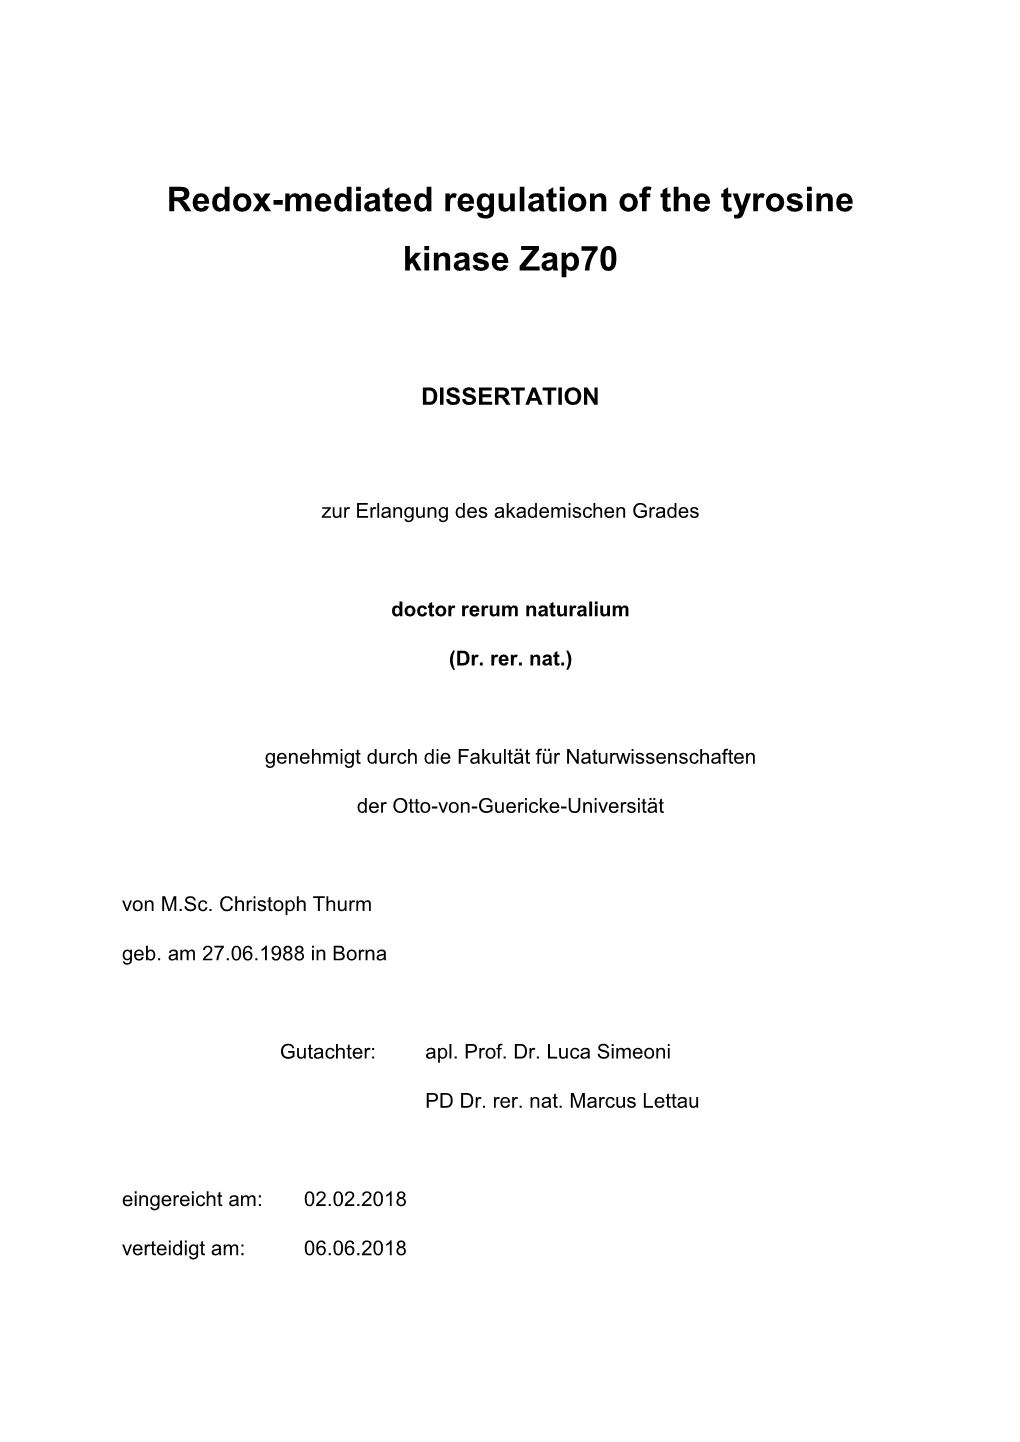 Redox-Mediated Regulation of the Tyrosine Kinase Zap70